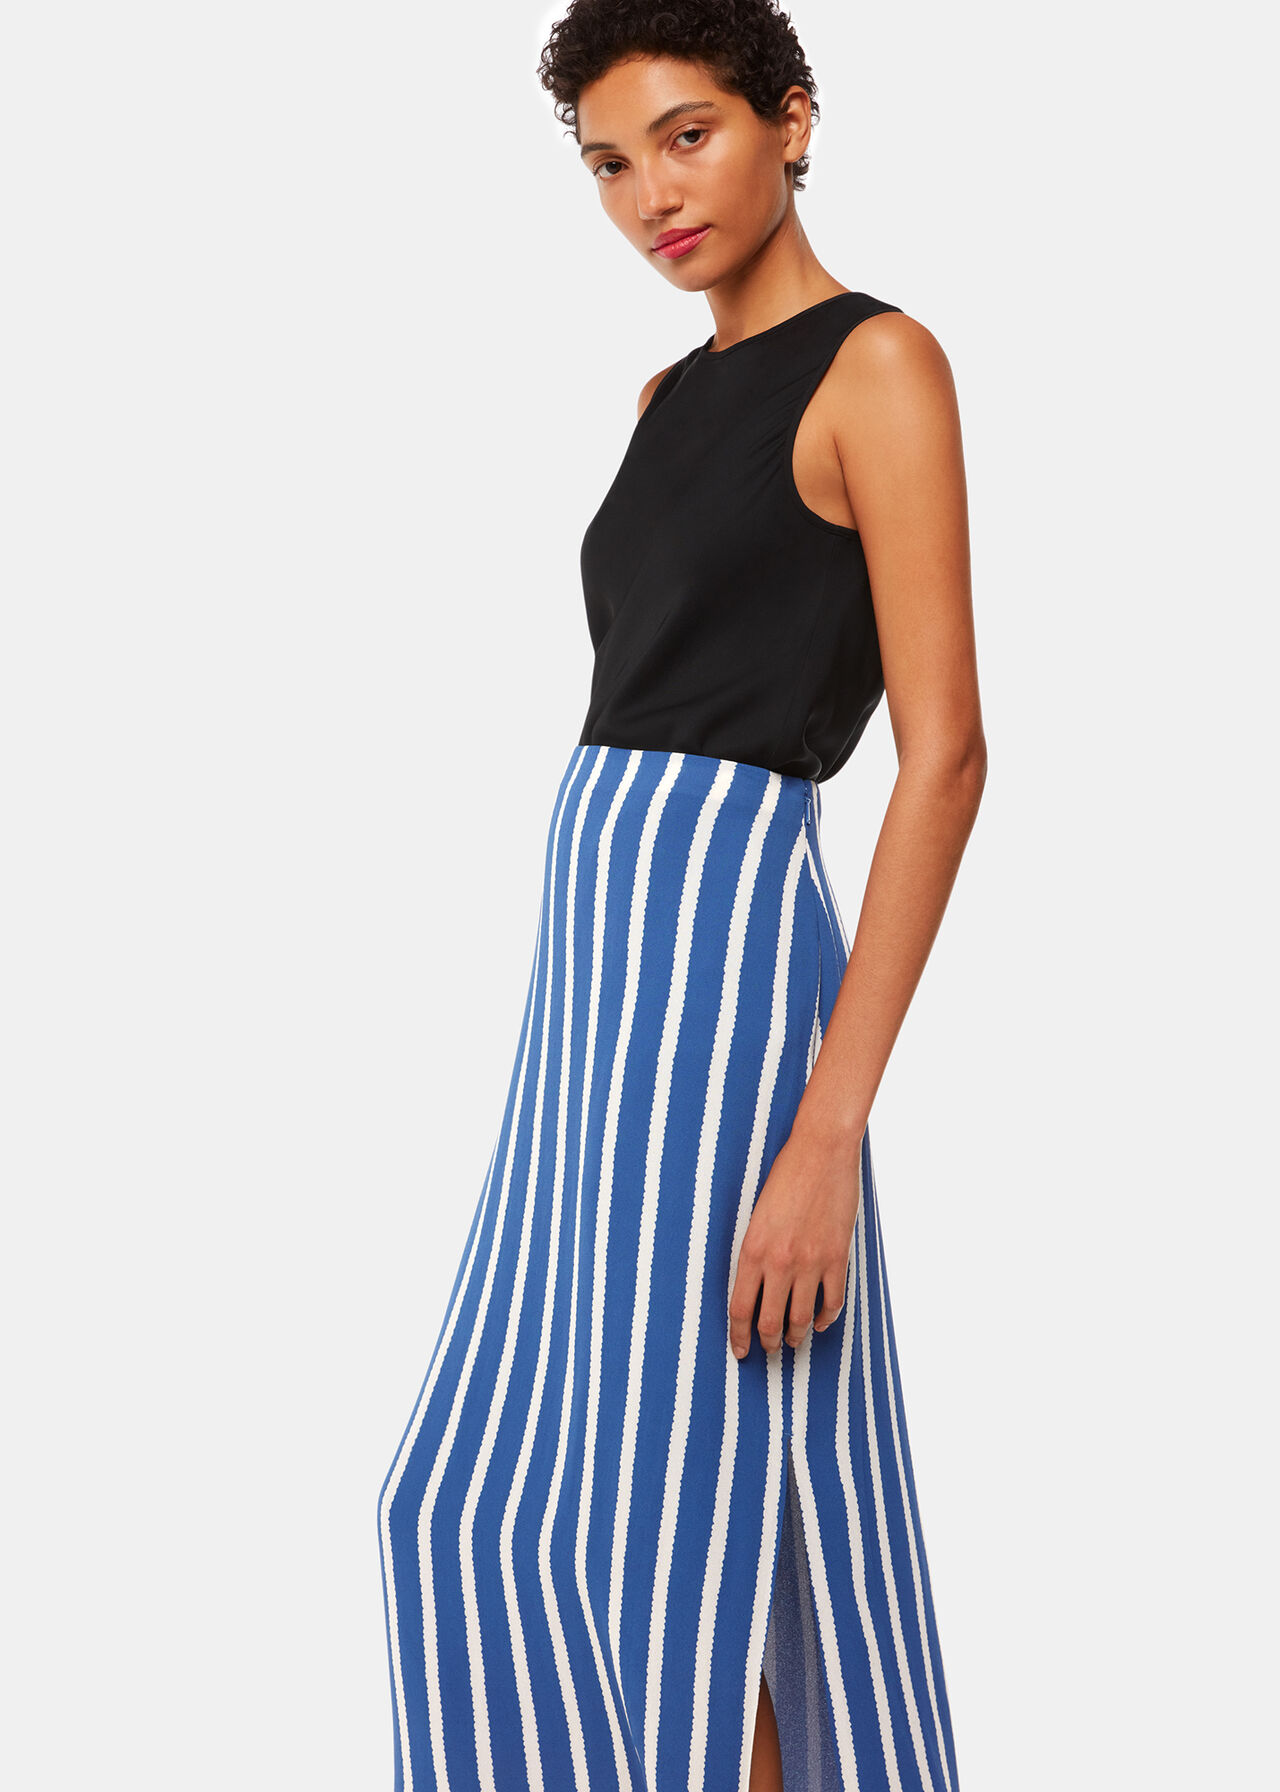 Crinkle Stripe Midi Skirt